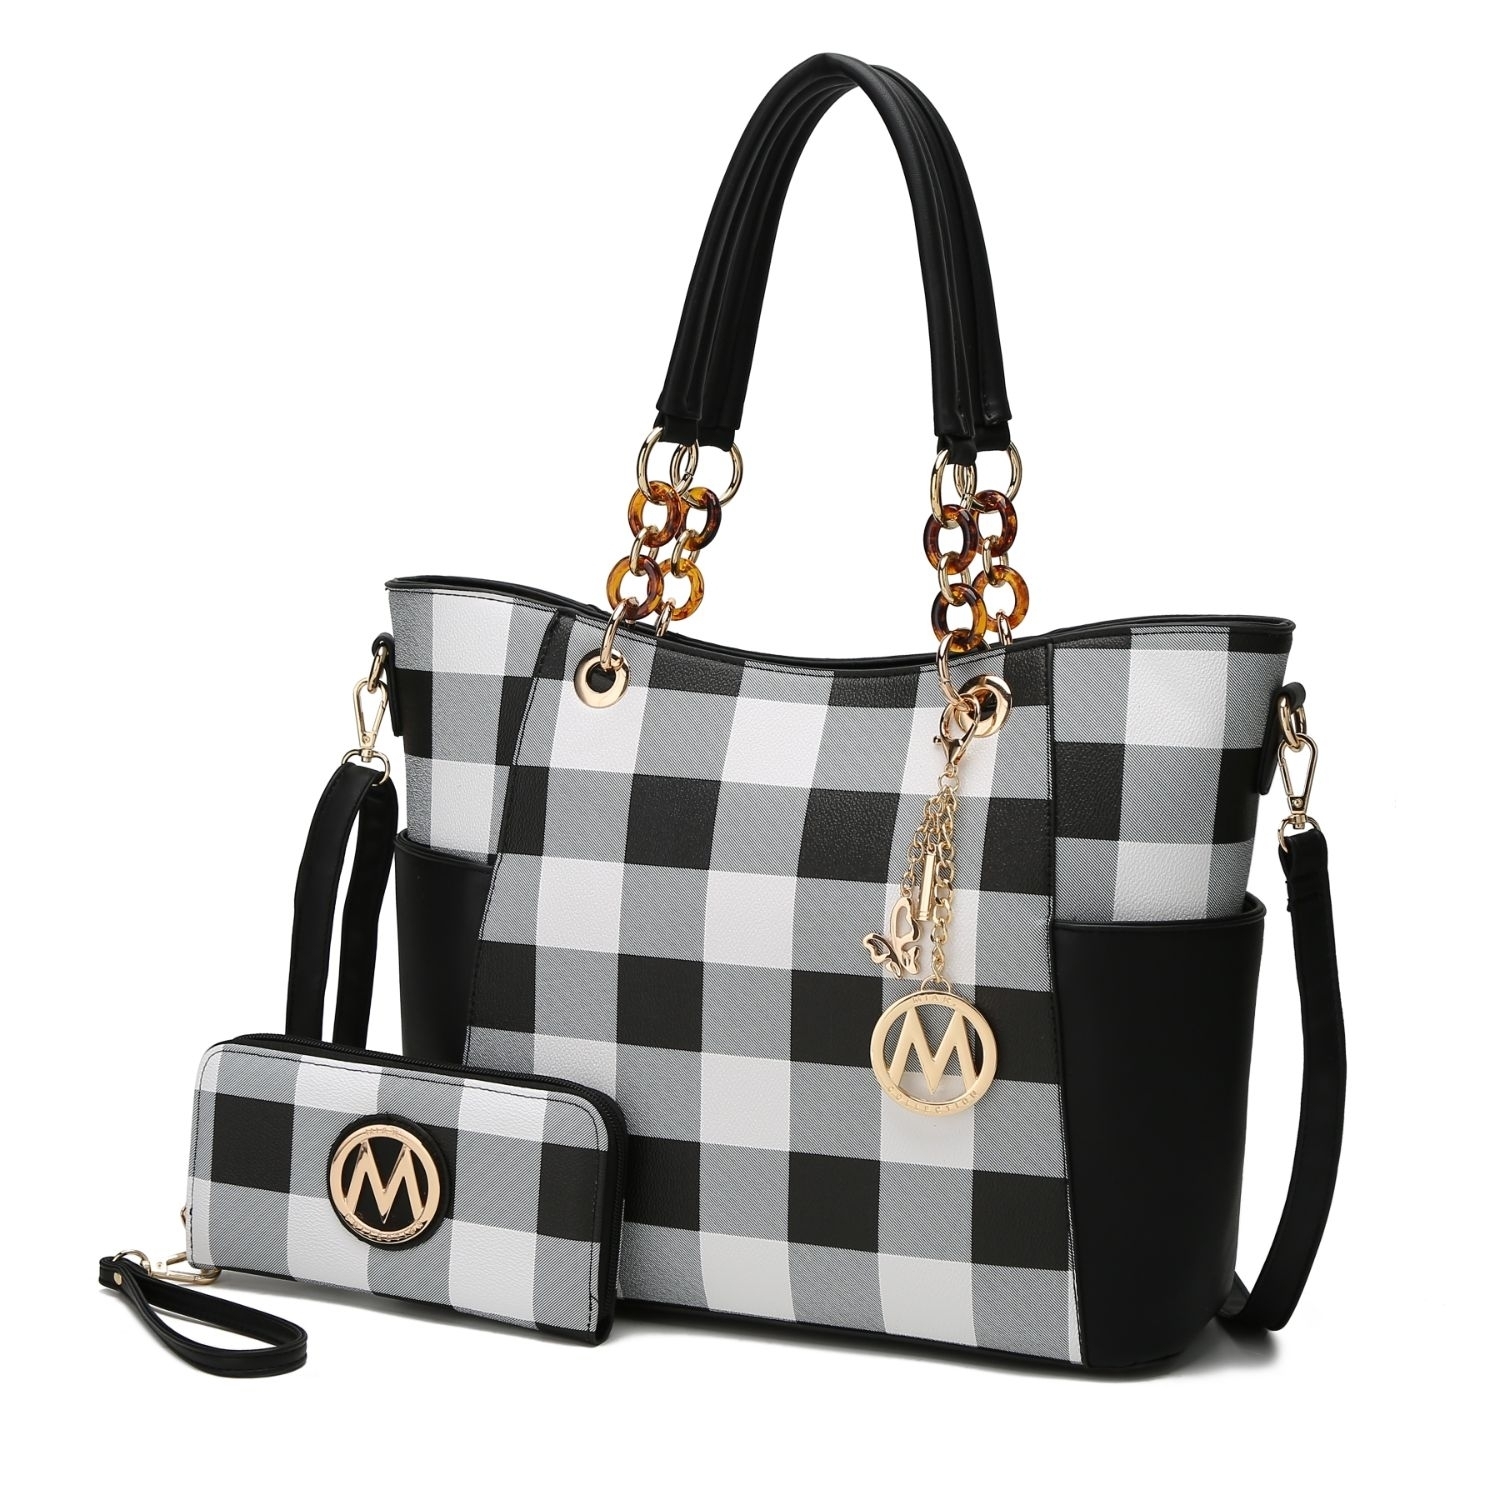 Bonita Checkered Tote 2 Pcs Wome's Large Handbag With Wallet And Decorative M Keychain By Mia K. - Black